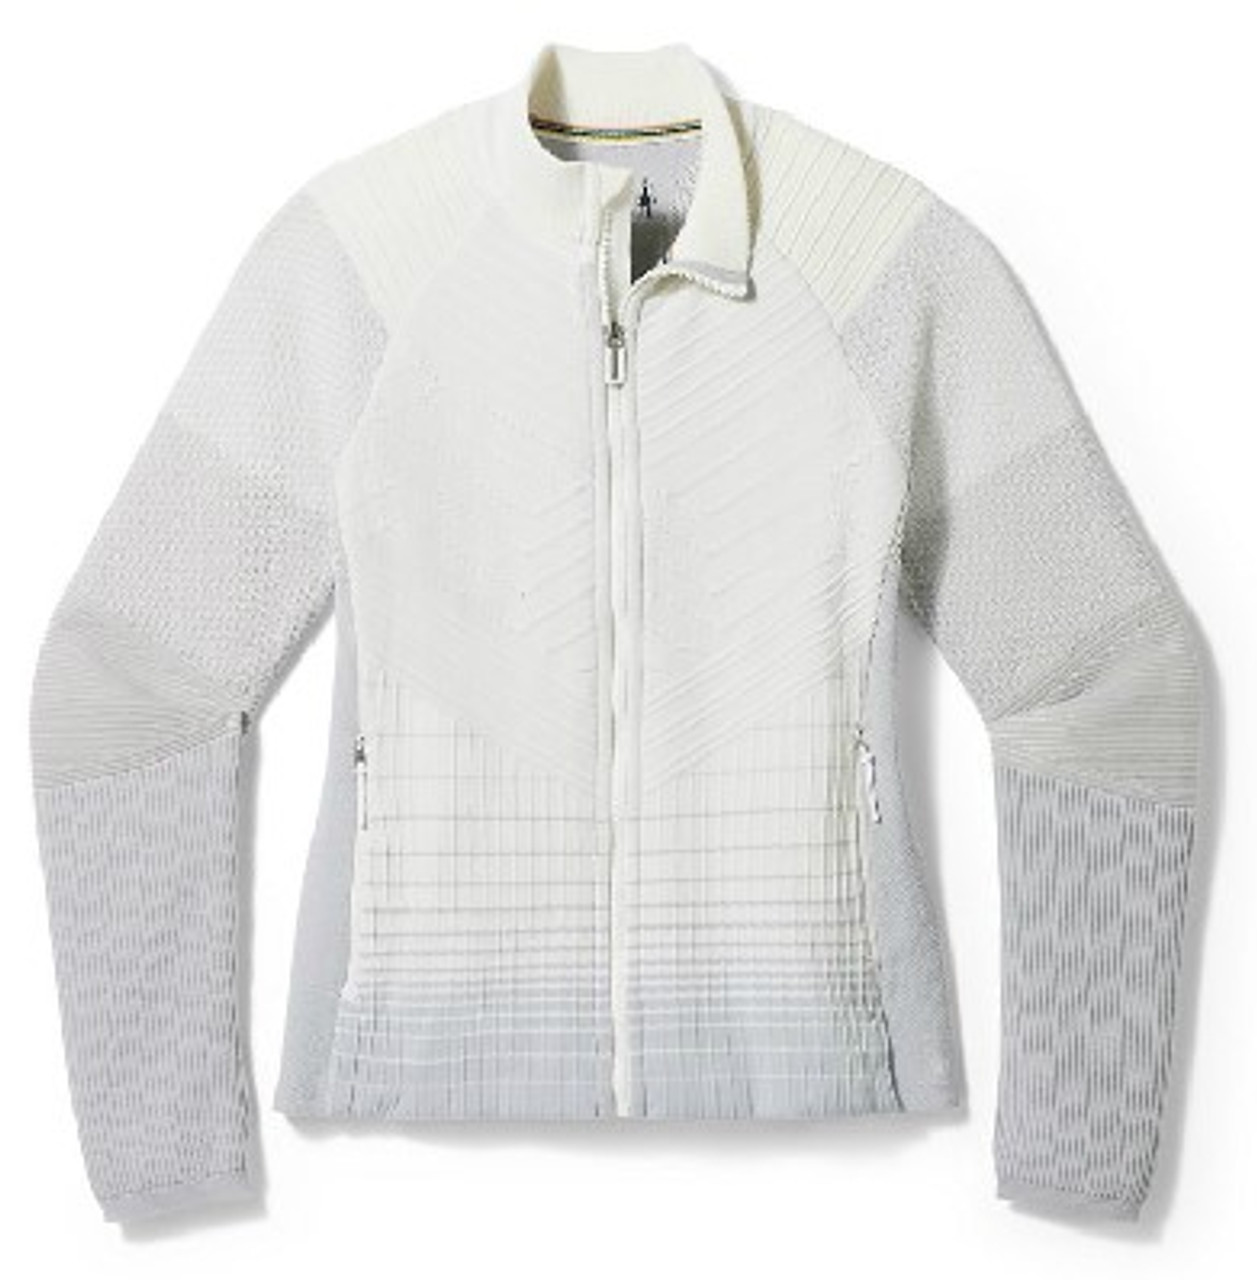 Women's Intraknit Merino Insulated Jacket - Winter White - (Past